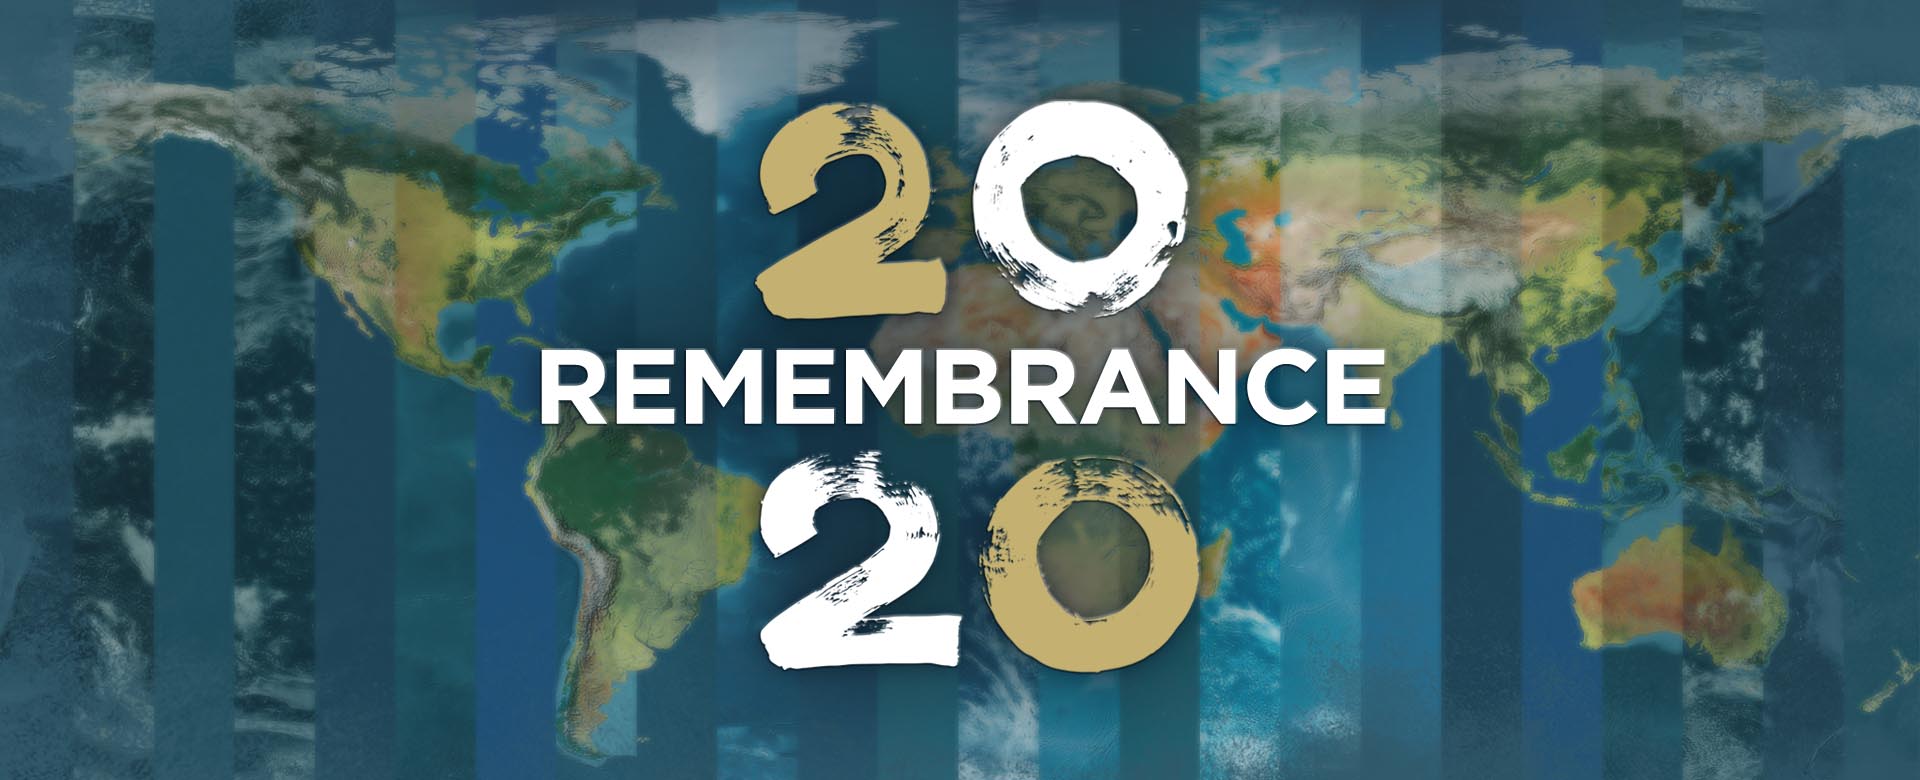 2020 Remembrance